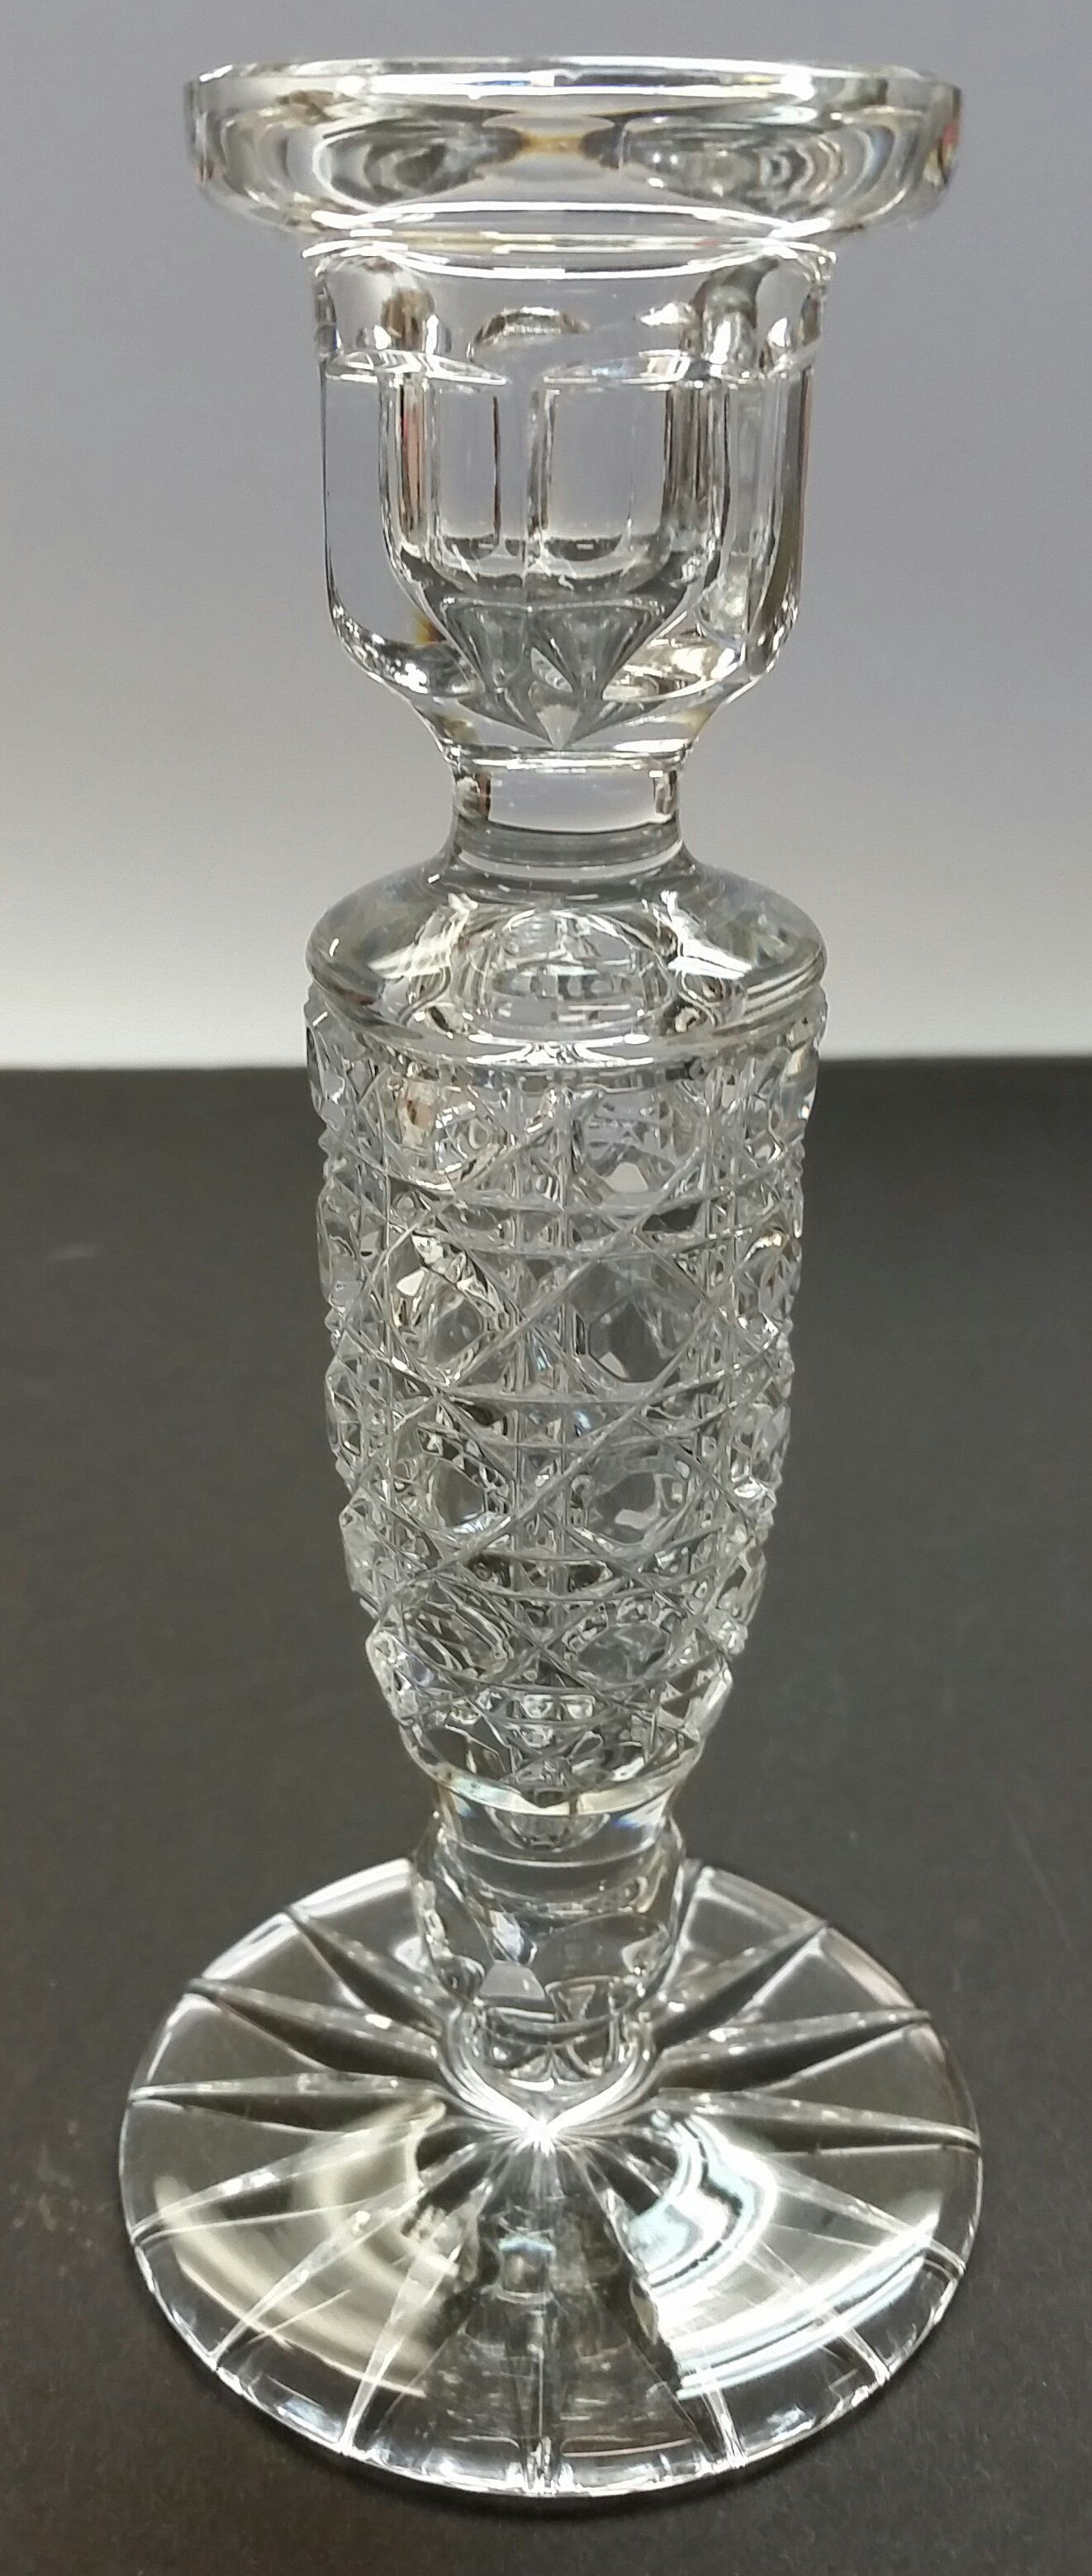 21 Spectacular William Yeoward Crystal Vase 2024 free download william yeoward crystal vase of cut crystal octagonal vase pertaining to pair cut glass candle sticks